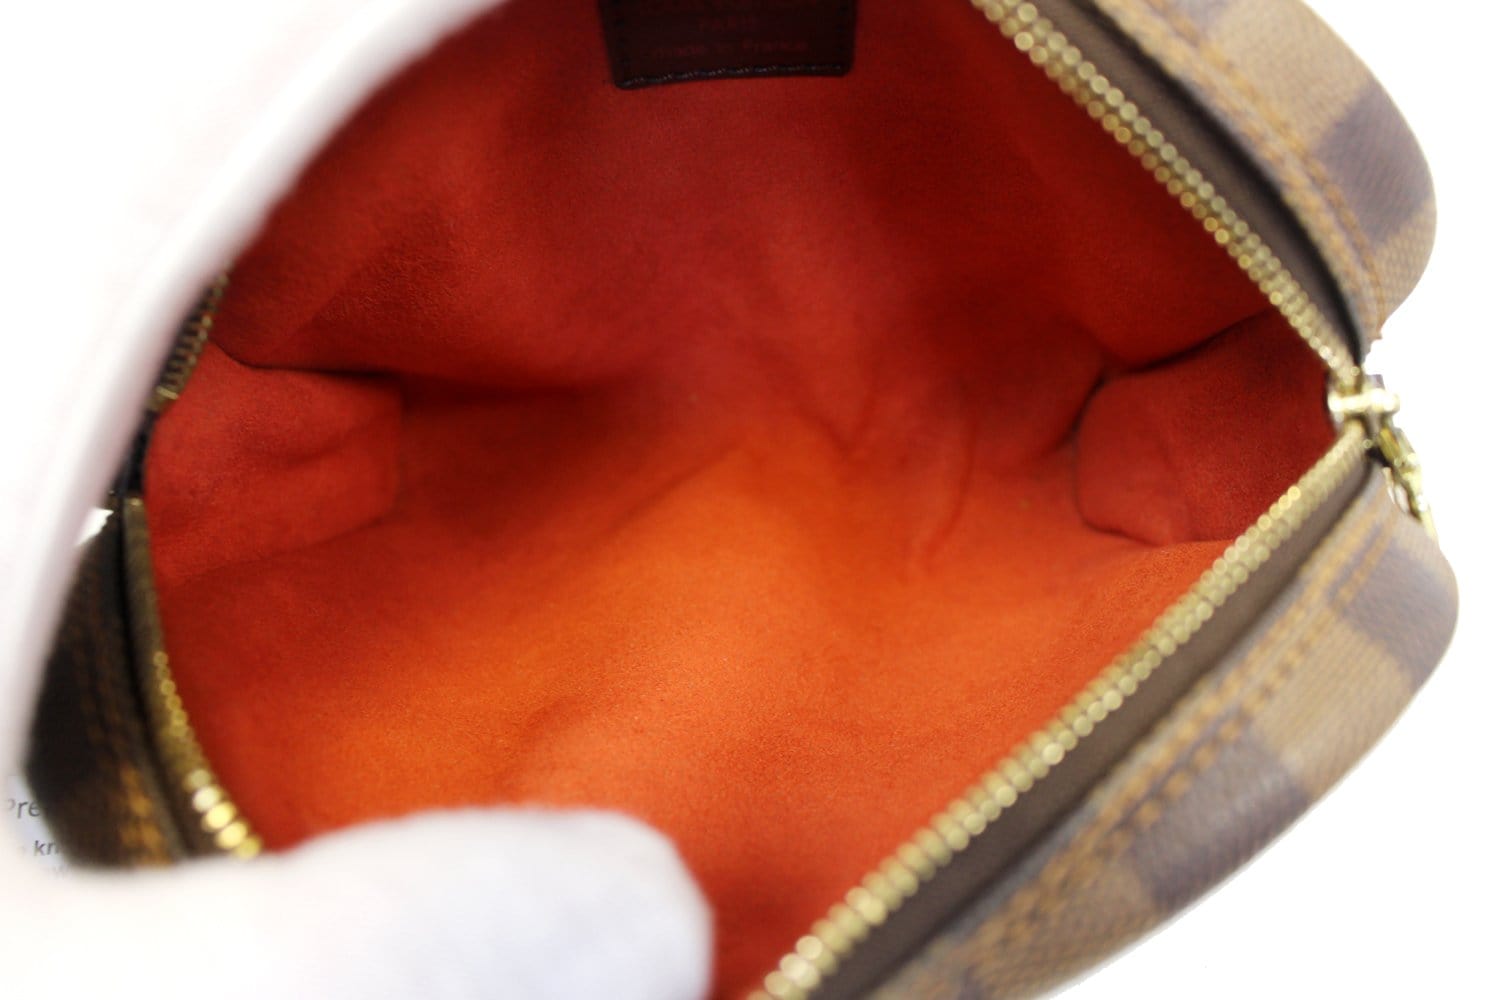 LOUIS VUITTON Pochette Ipanema Mini Shoulder Bag Damier Leather N51296  75GA163